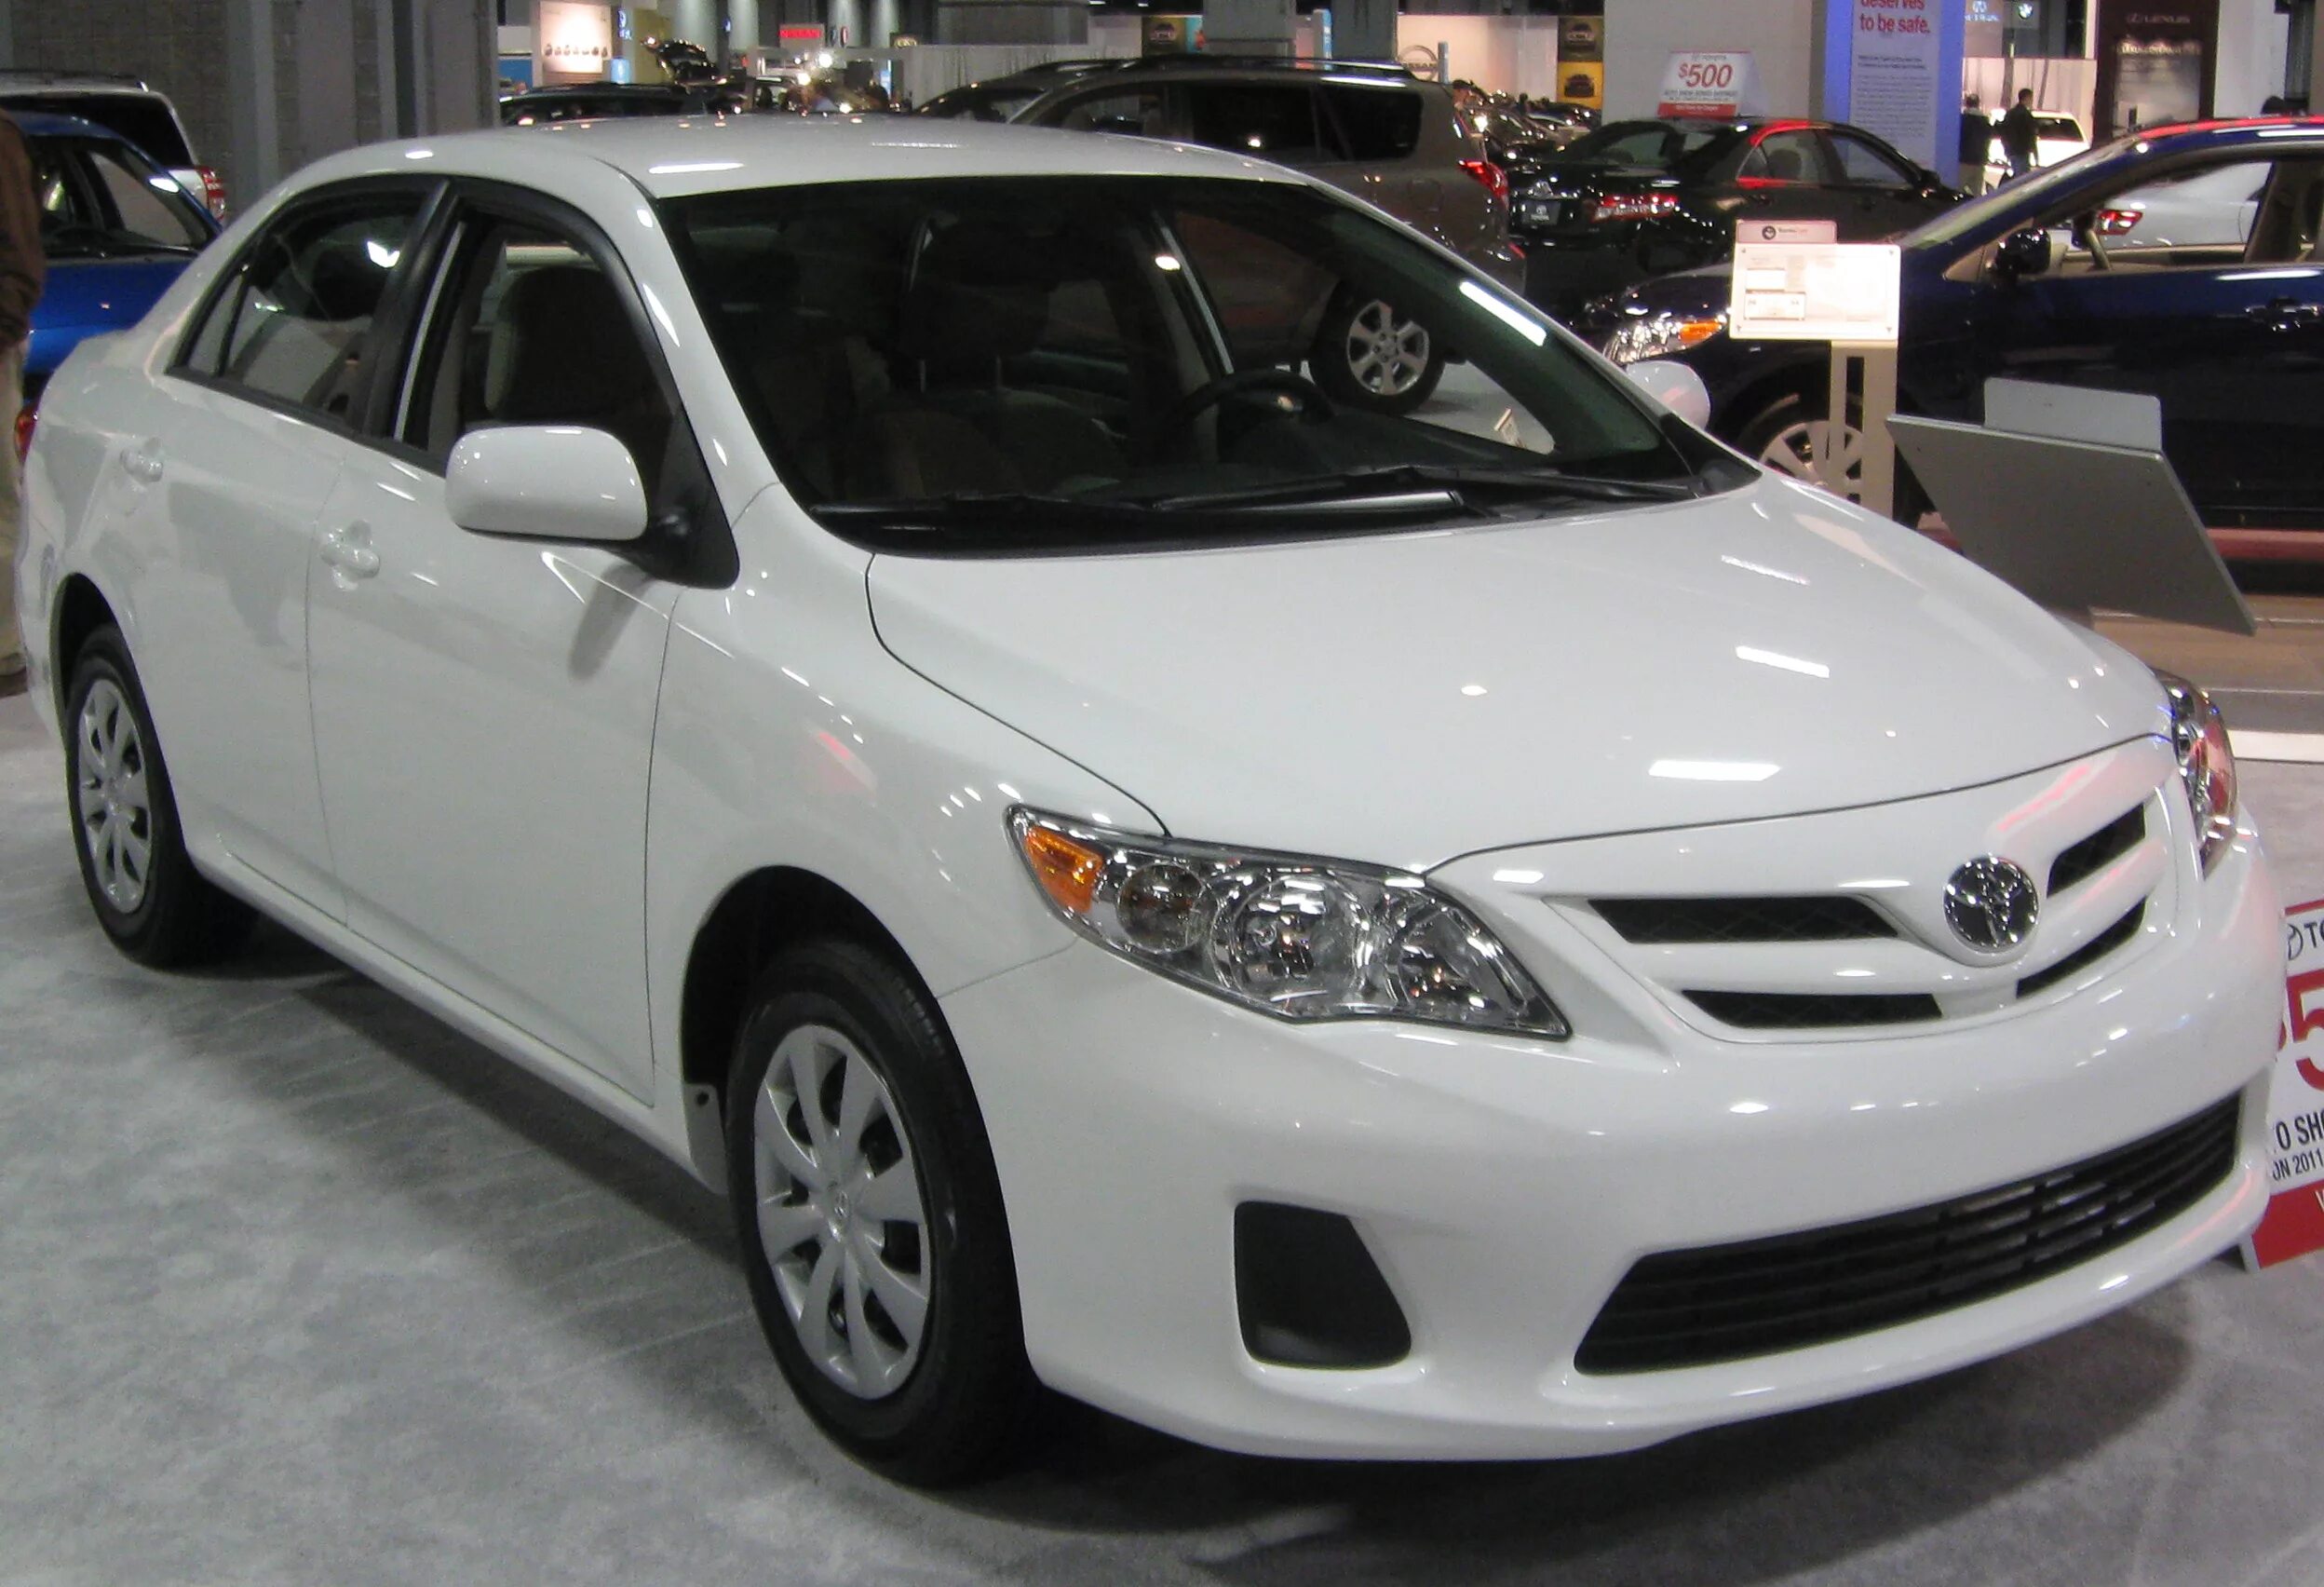 Купить тойоту короллу 2. Toyota Corolla 2011. Тойота Corolla 2011. Тойота Королла 2011 года. Toyota Corolla s 2011.